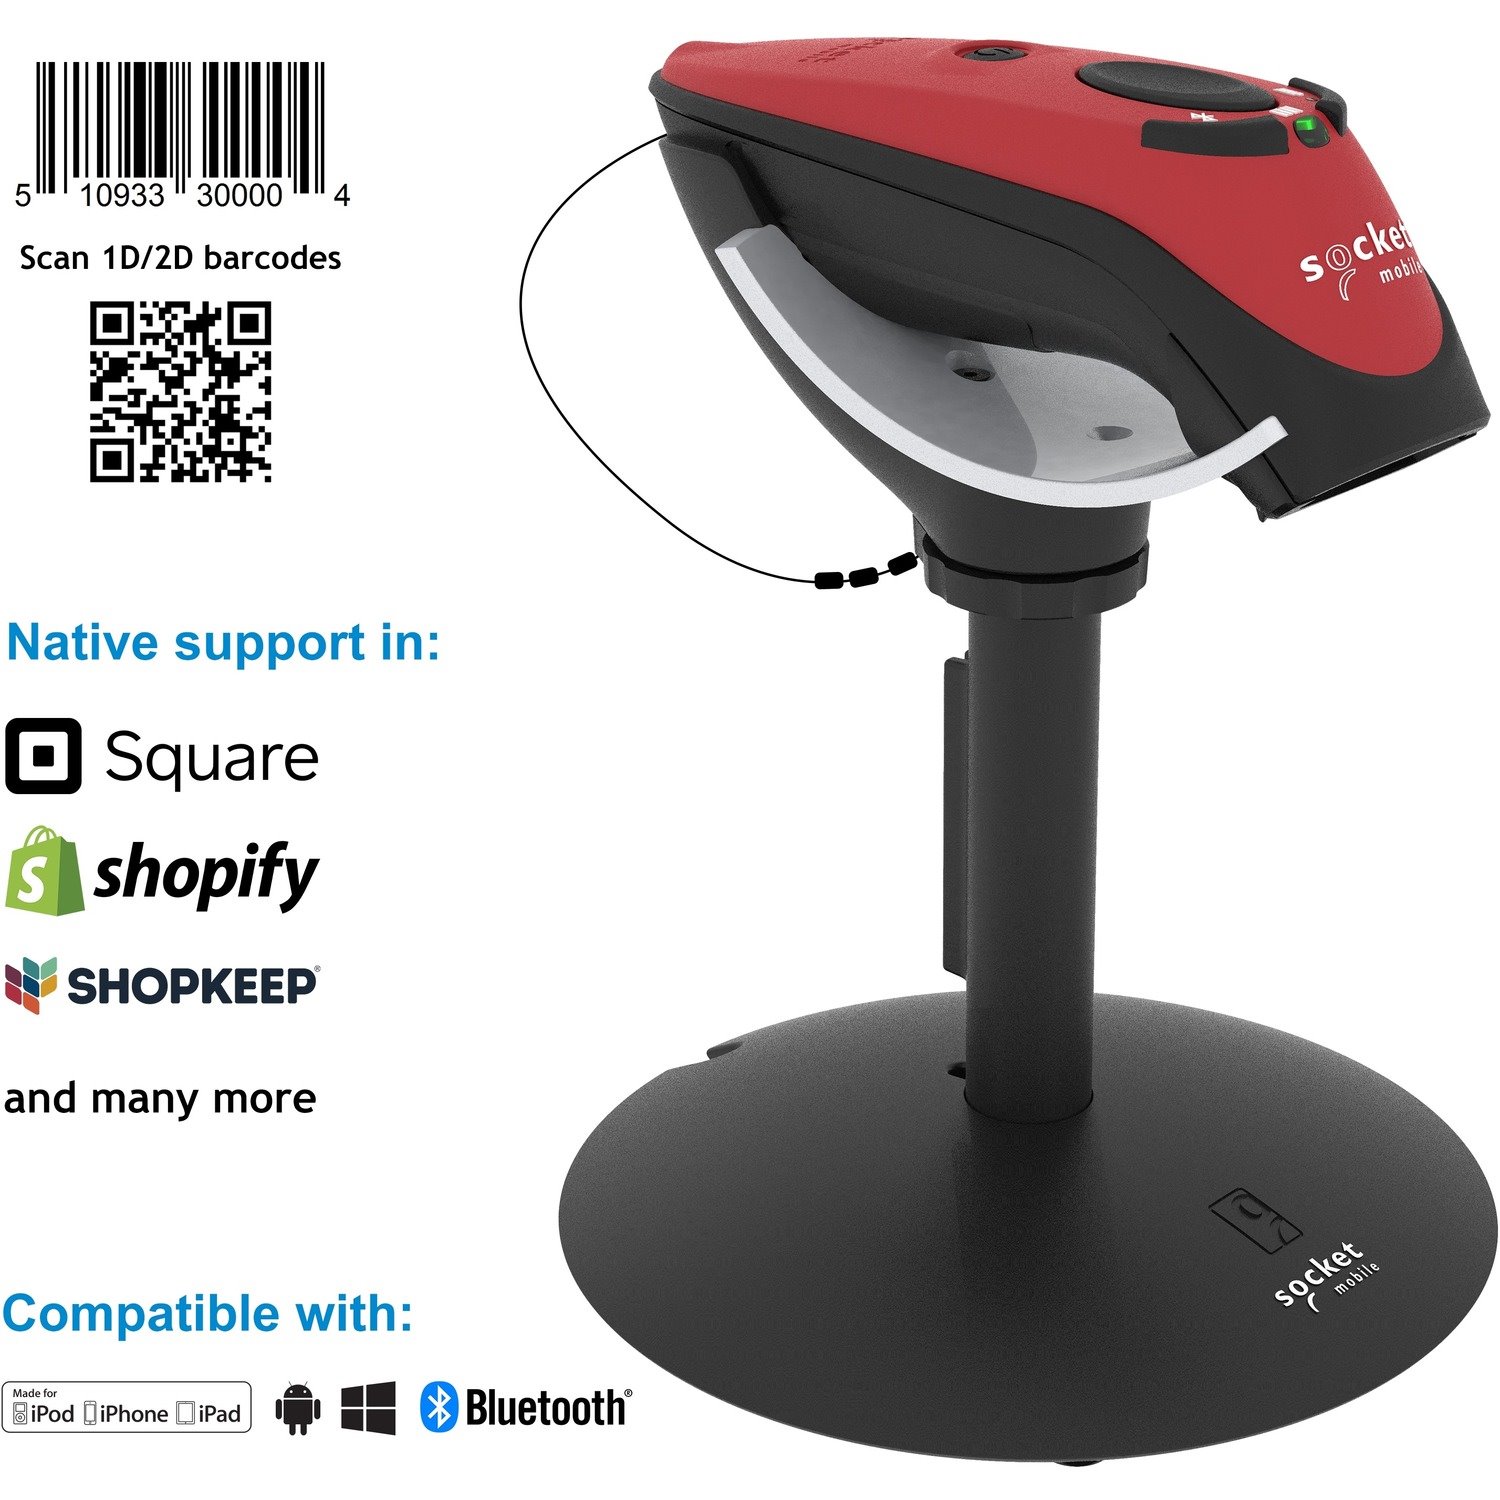 Socket Mobile DuraScan D740 Handheld Barcode Scanner - Wireless Connectivity - Red